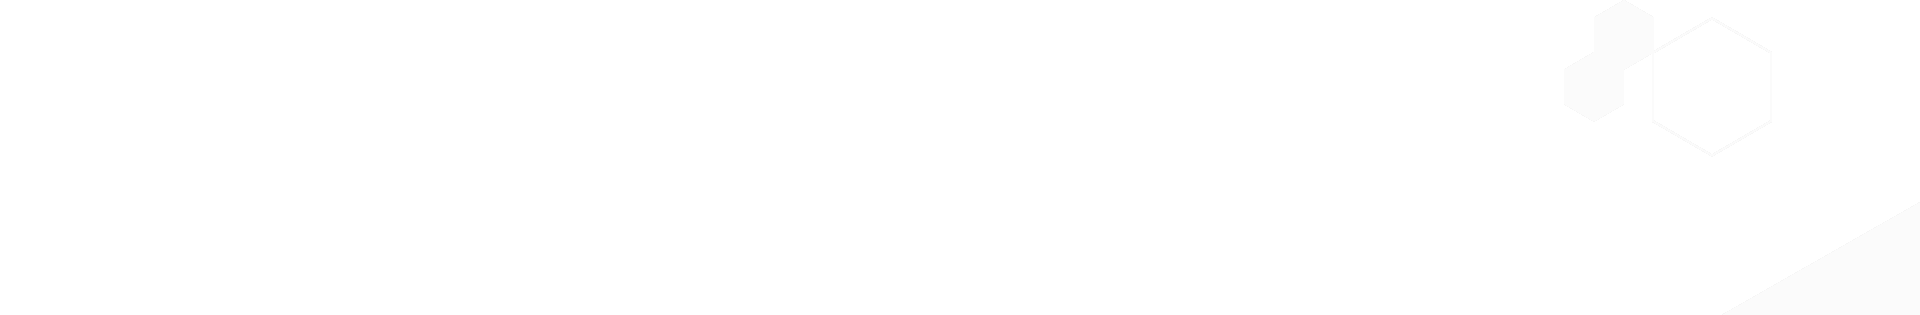 bgn-white-angle-hexagons-bottom-2 empty PNG 1920x315